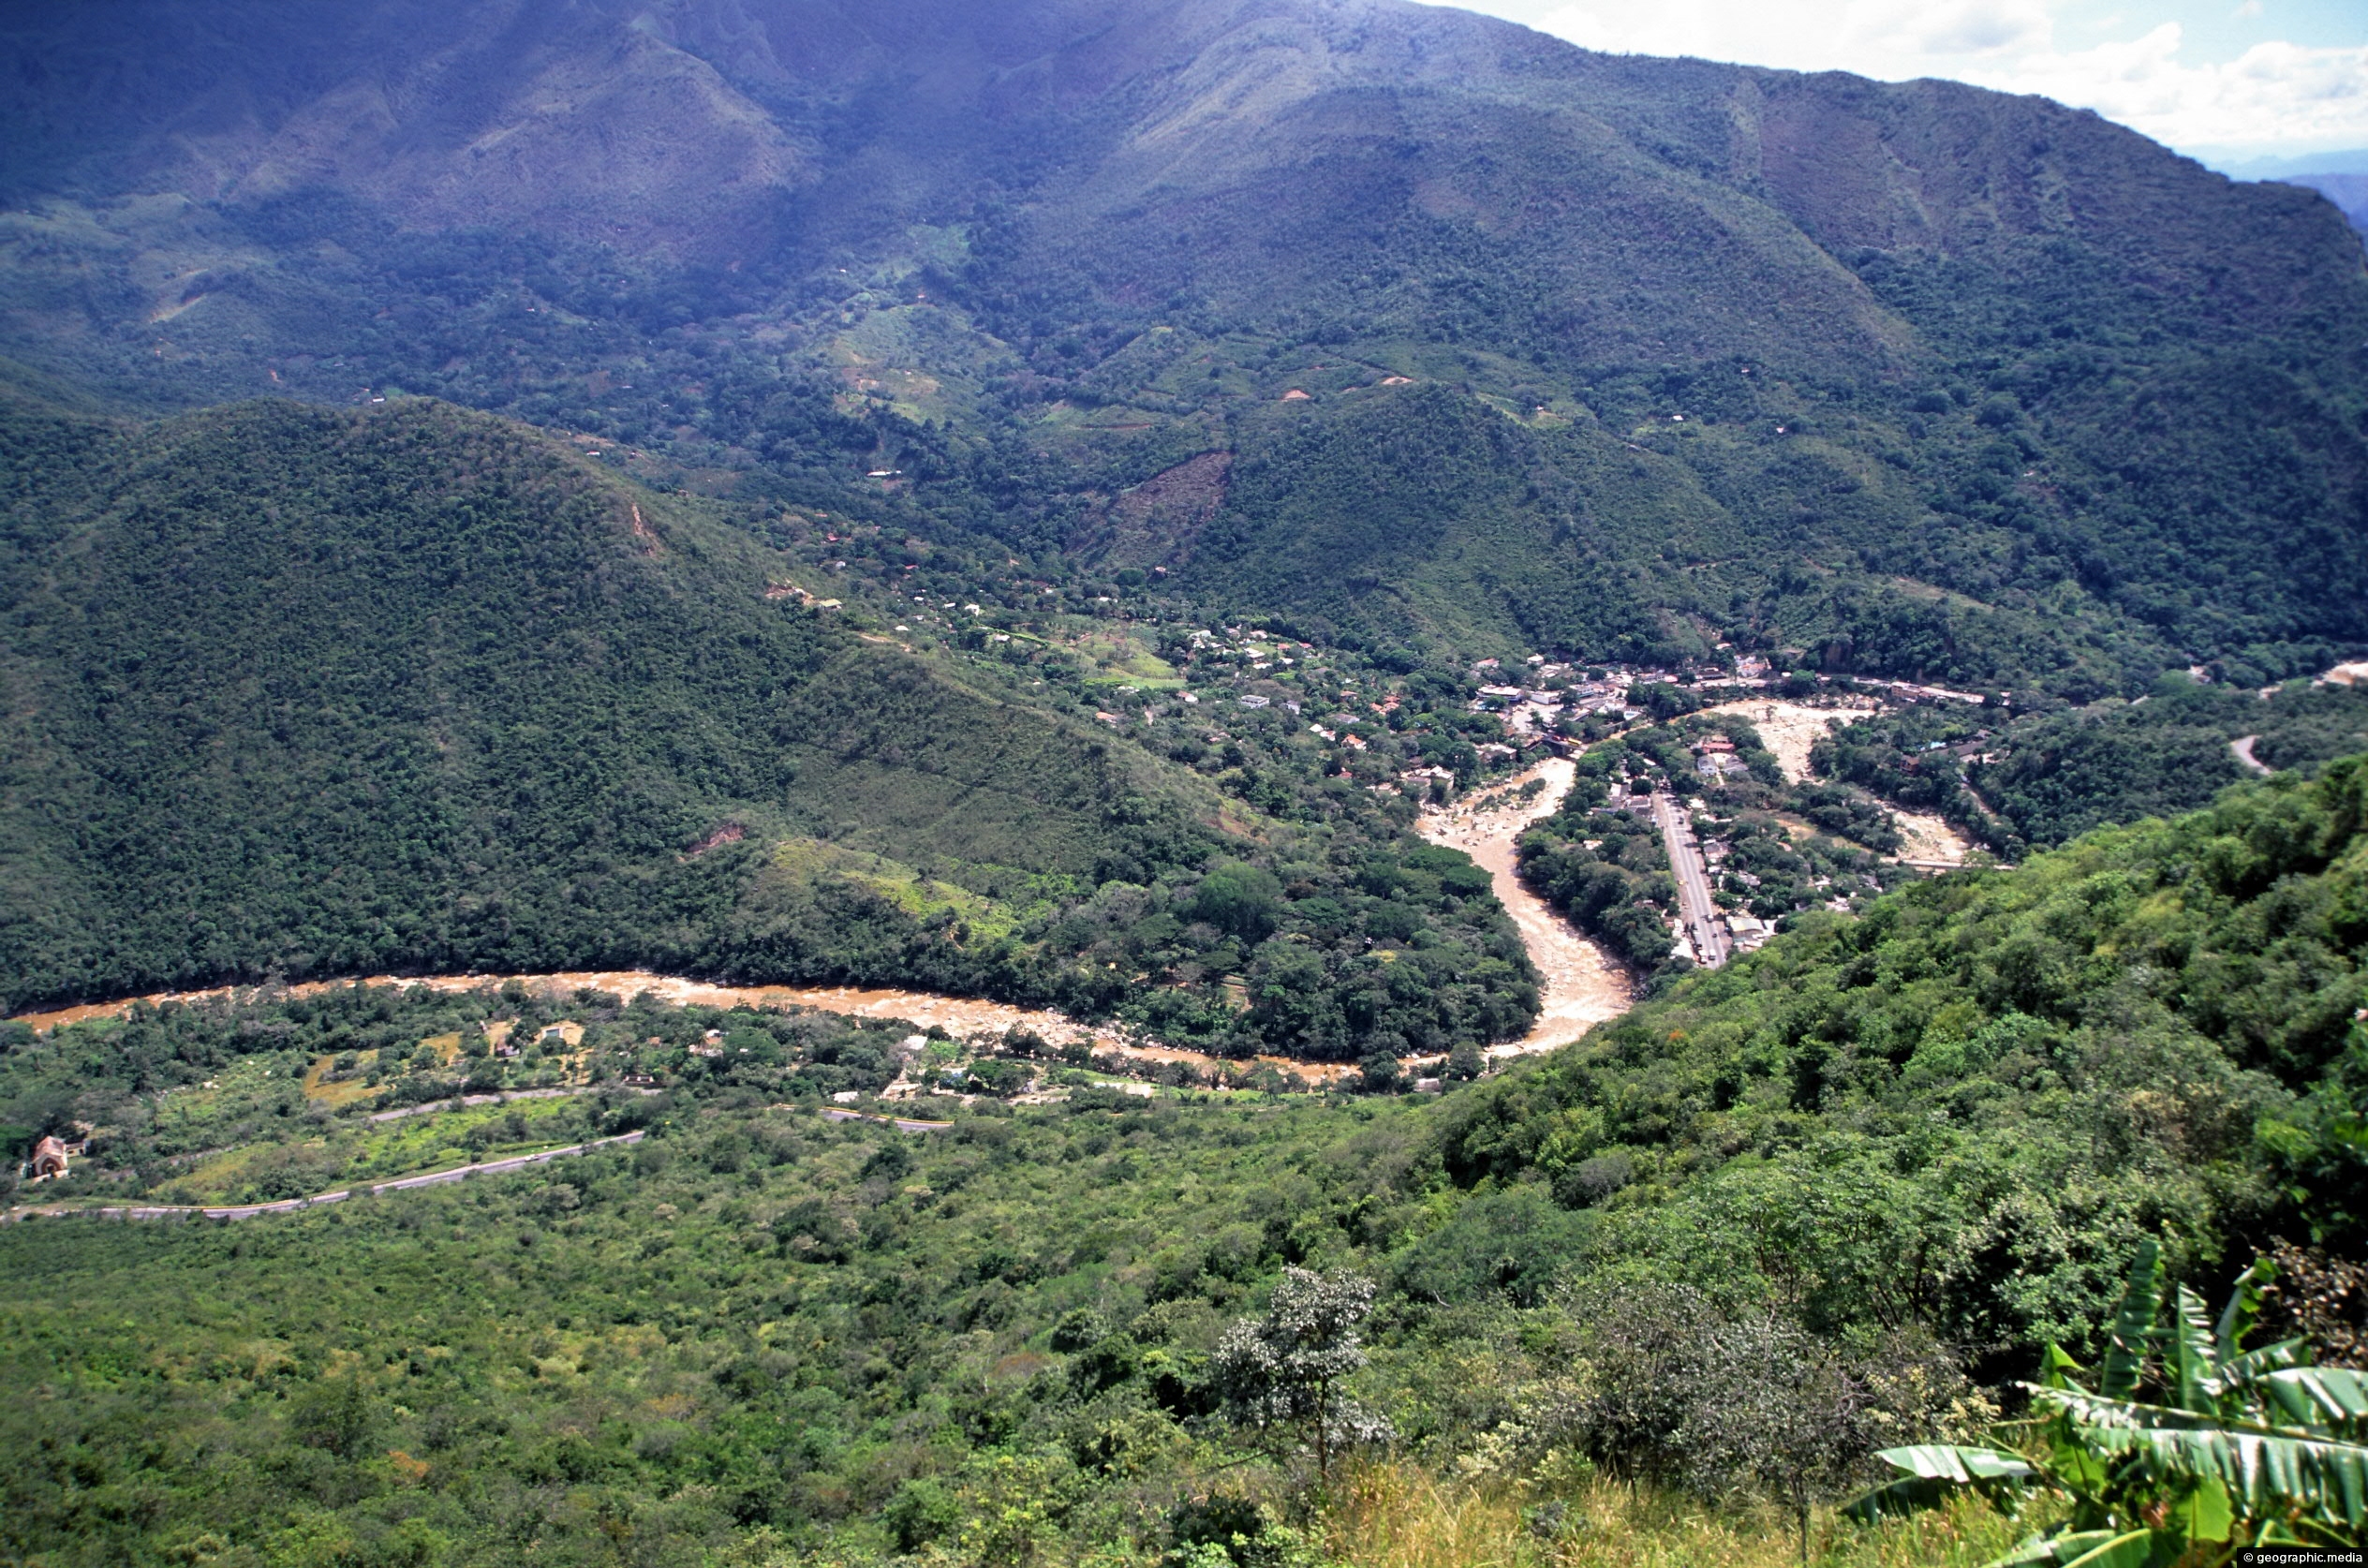 Sumapaz River in Cundinamarca Colombia